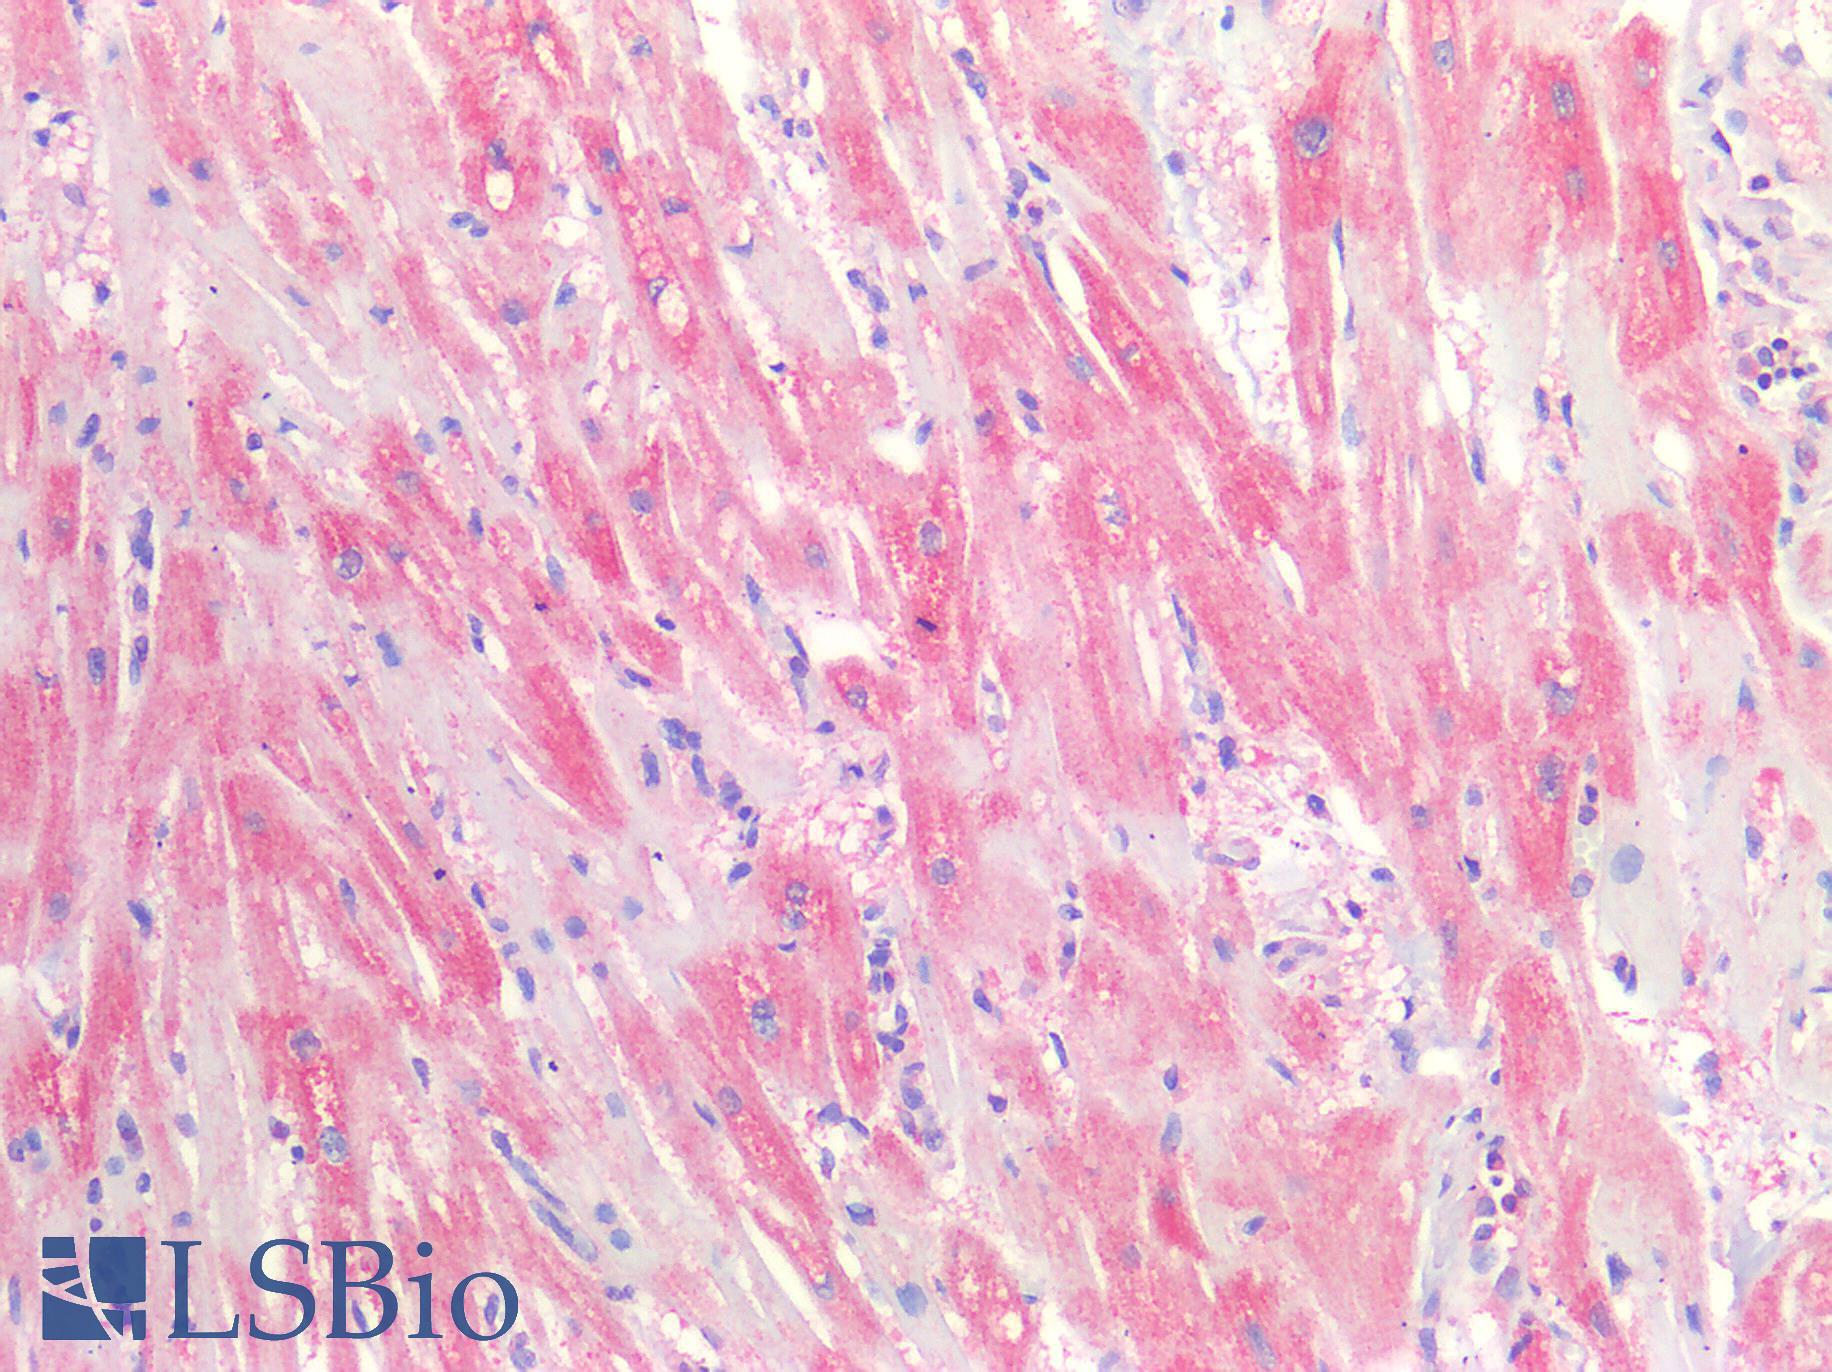 CD81 Antibody - Human Heart: Formalin-Fixed, Paraffin-Embedded (FFPE)